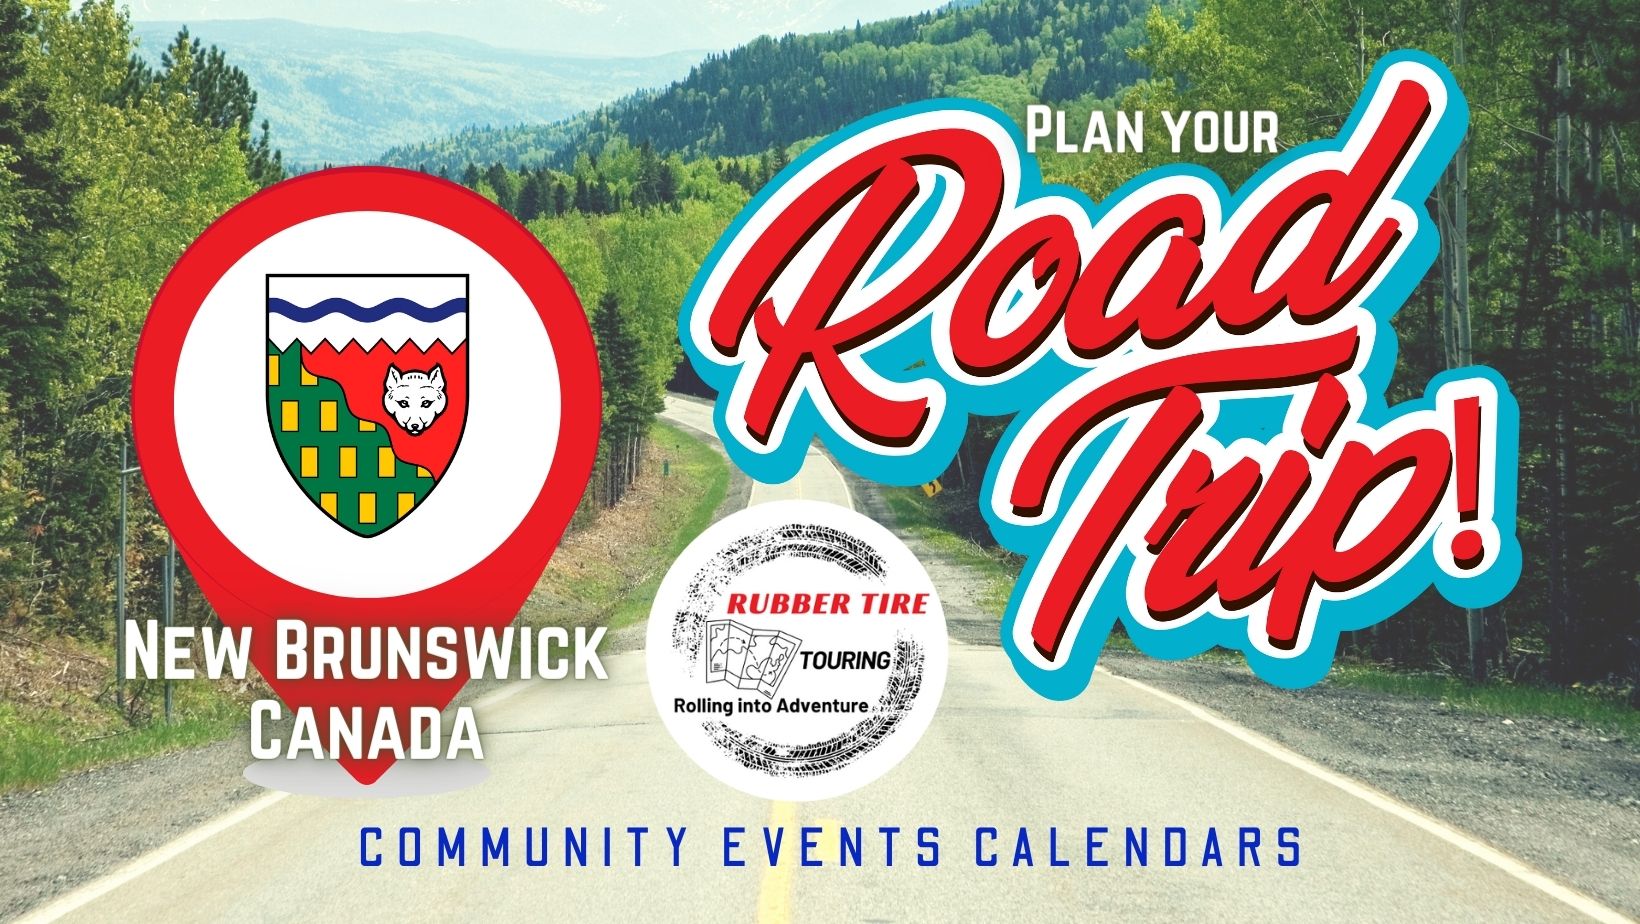 NT Events Calendar - Plan your road trip!